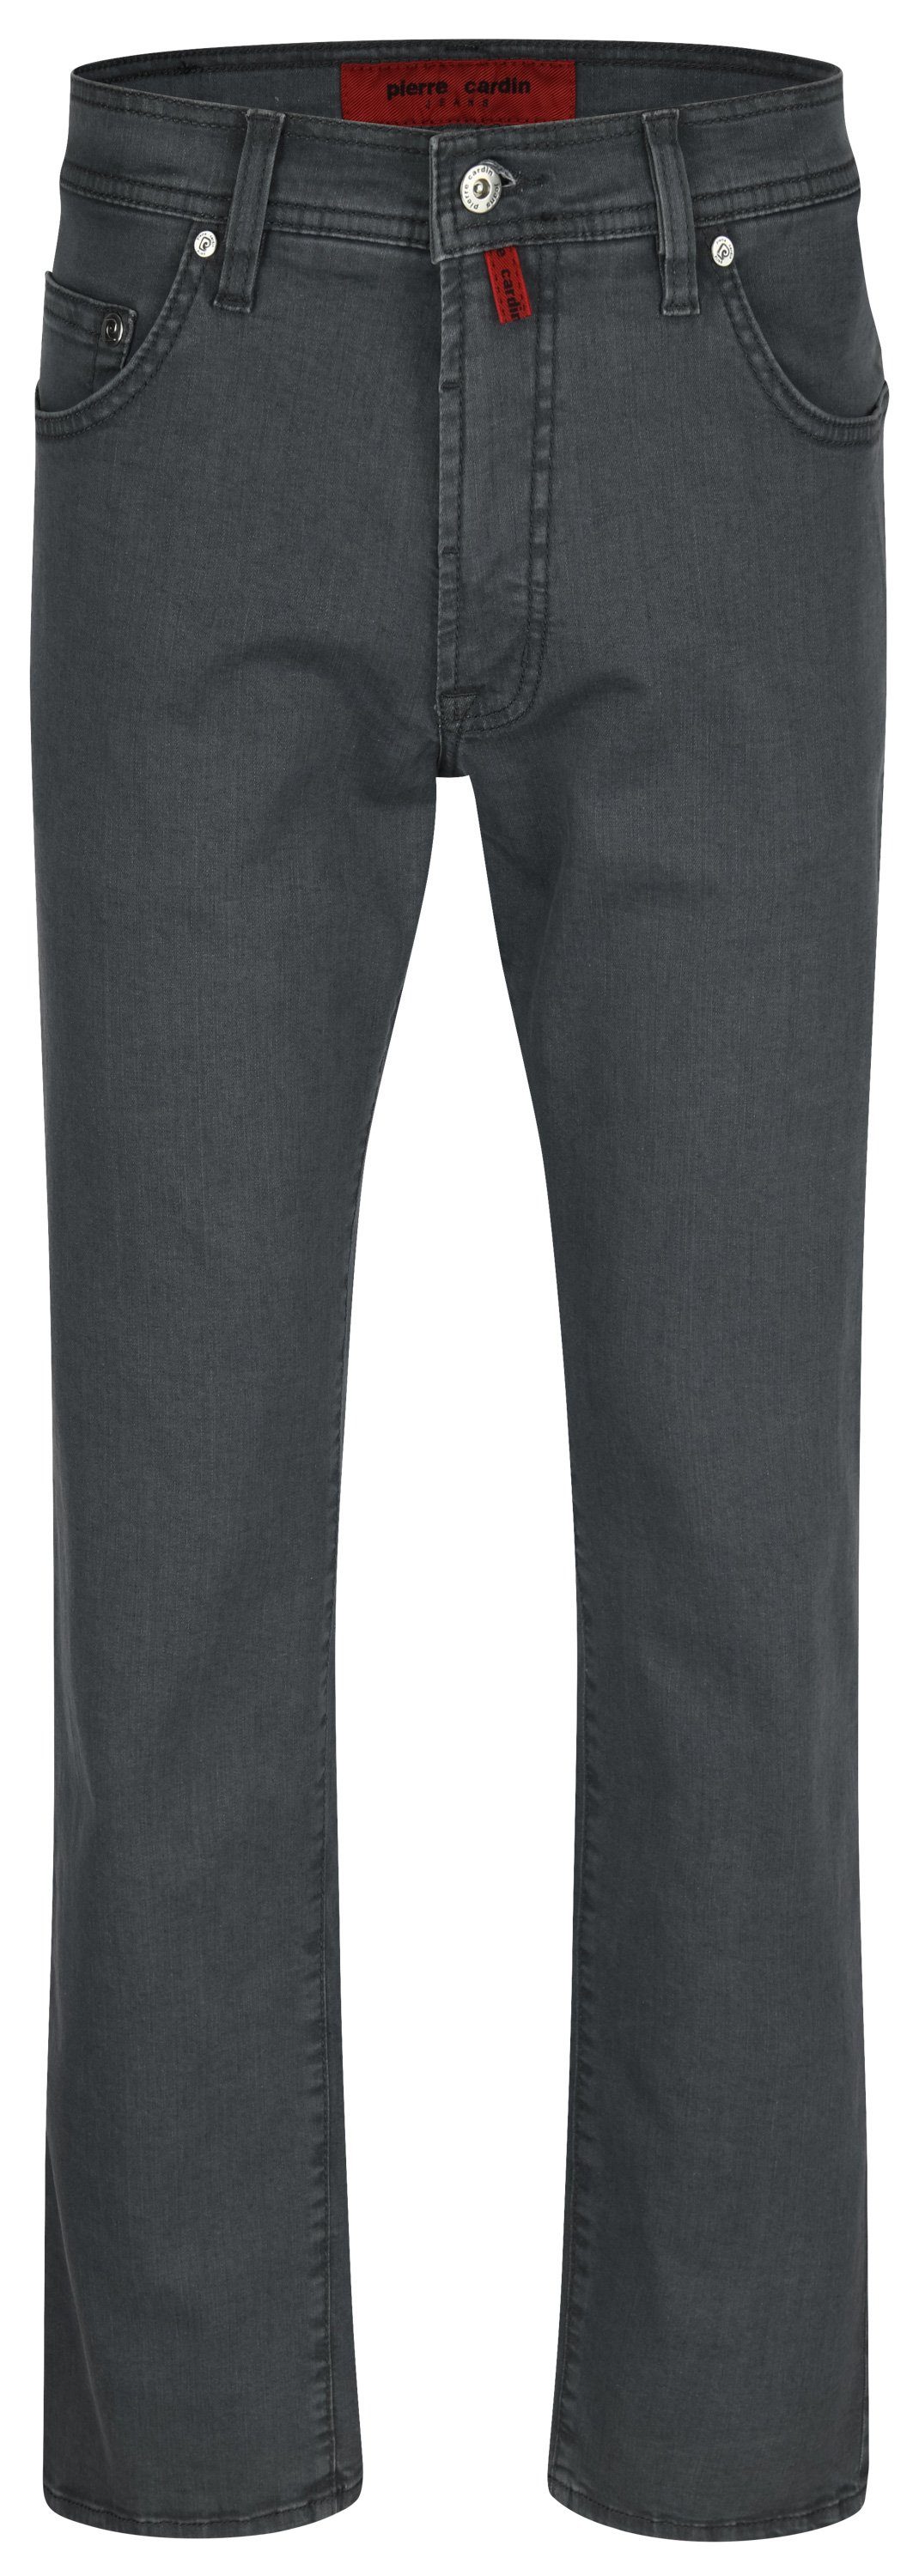 Pierre Cardin 5-Pocket-Jeans EDITION - DENIM CARDIN DEAUVILLE grey 3196 PIERRE 866.02 graphite